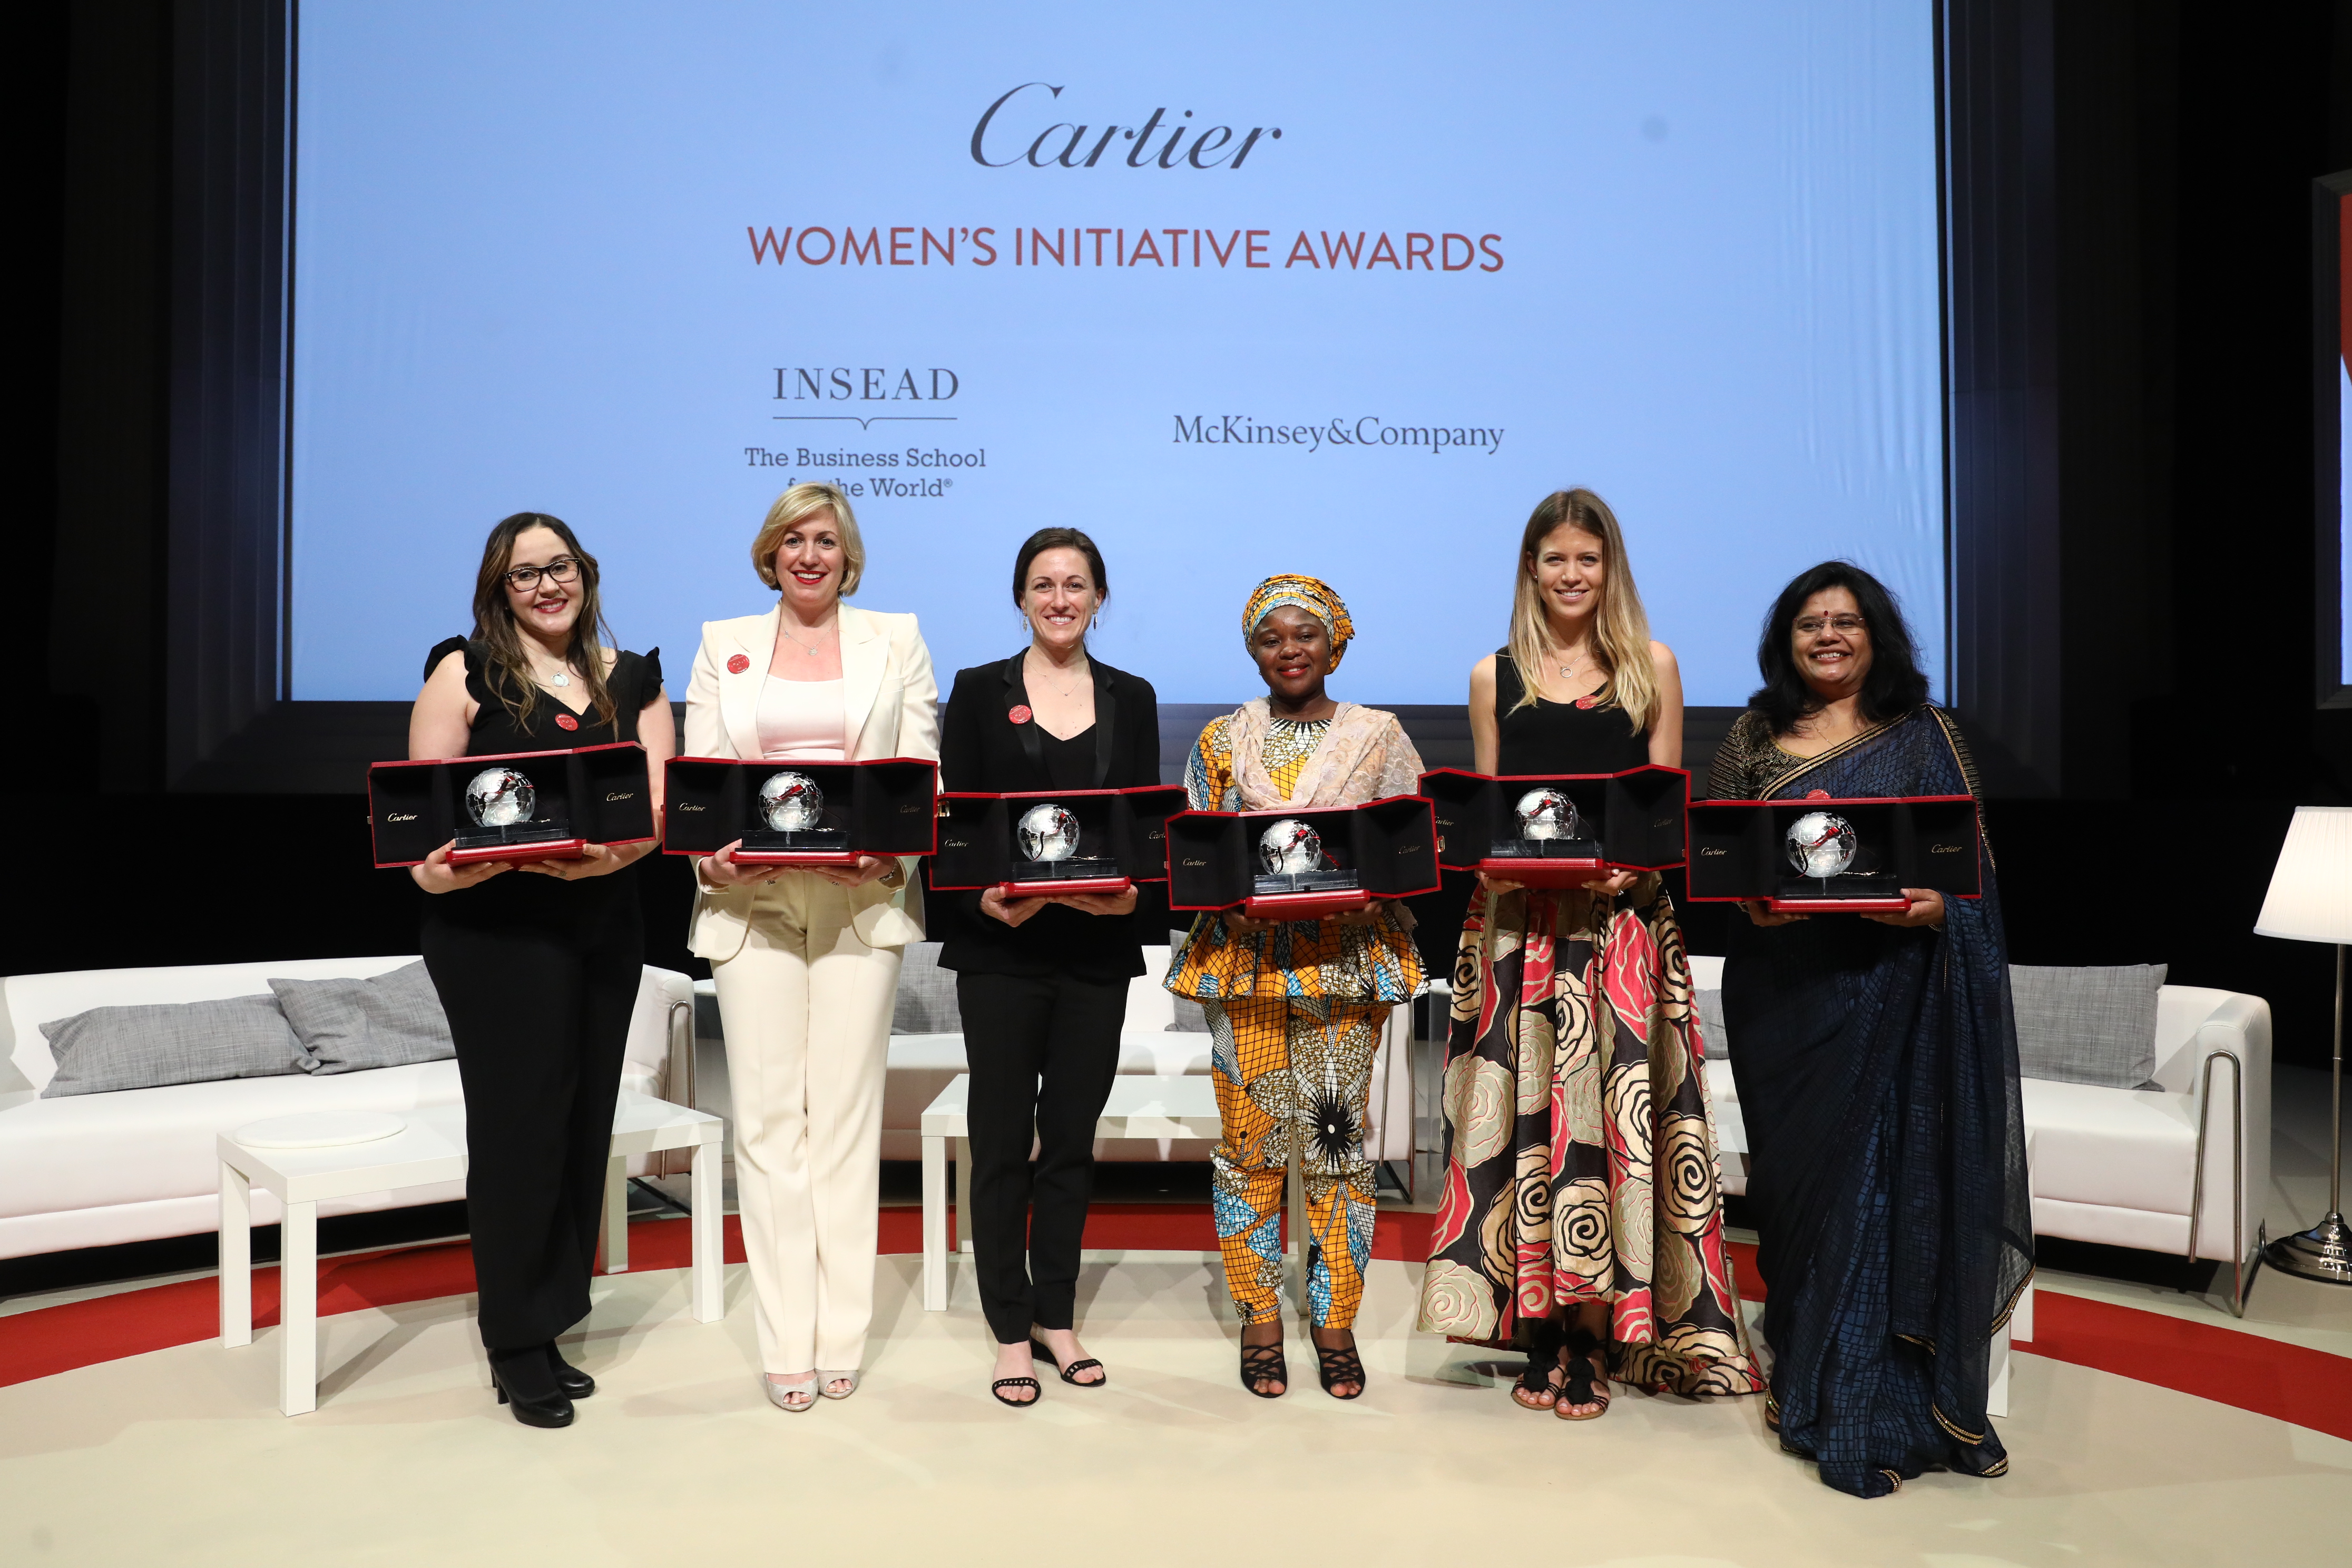 the cartier women's initiative awards